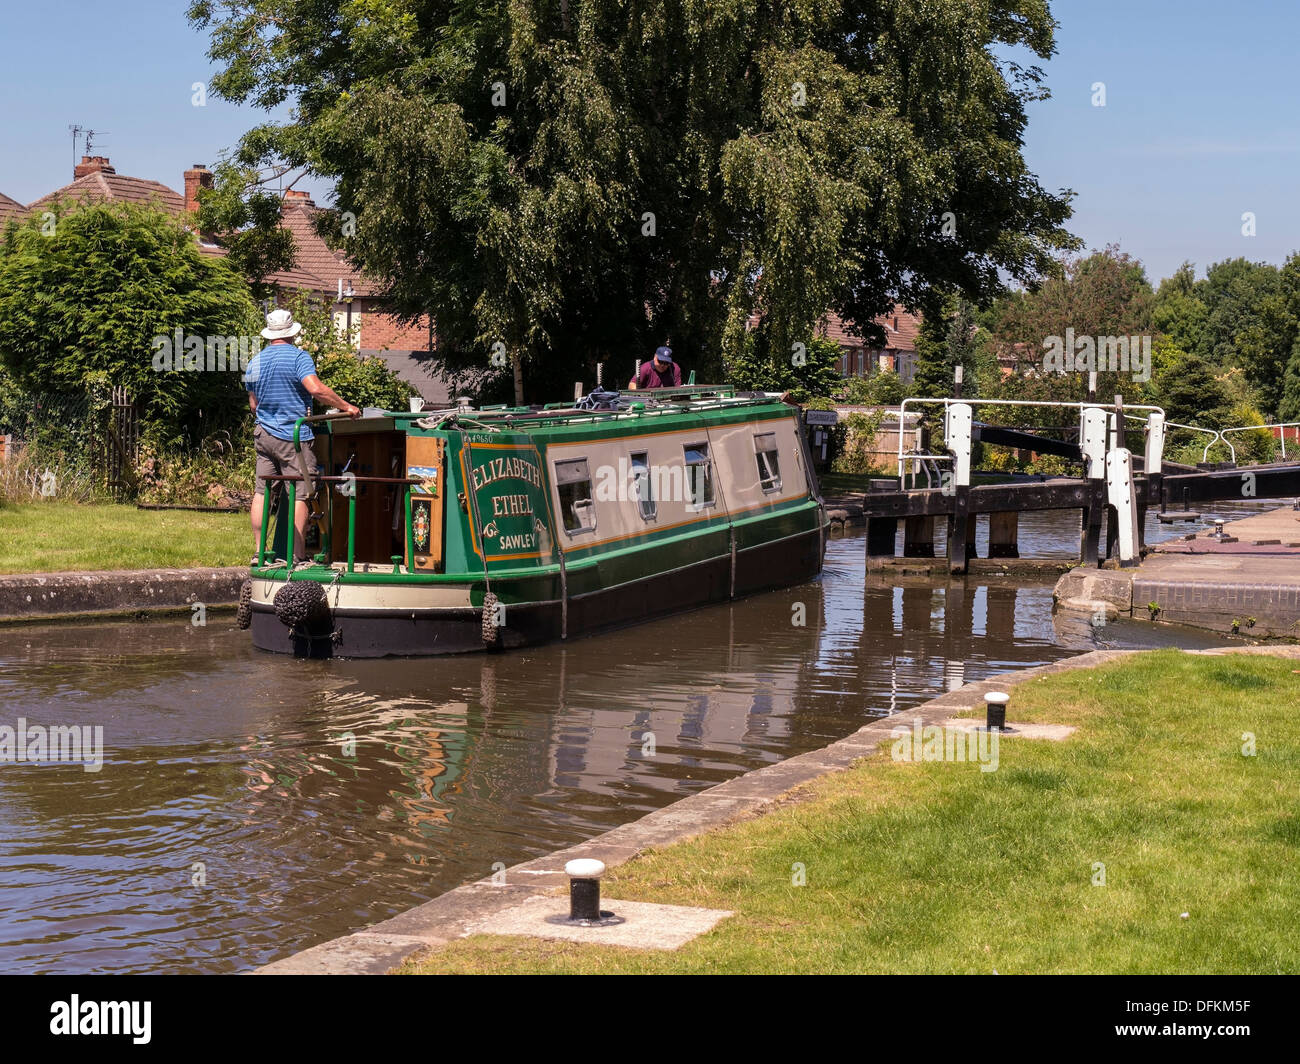 Narrowboat Eingabe Loughborough Schleuse Nr. 53 auf der Grand Union Canal, Loughborough, Leicestershire, England, UK Stockfoto